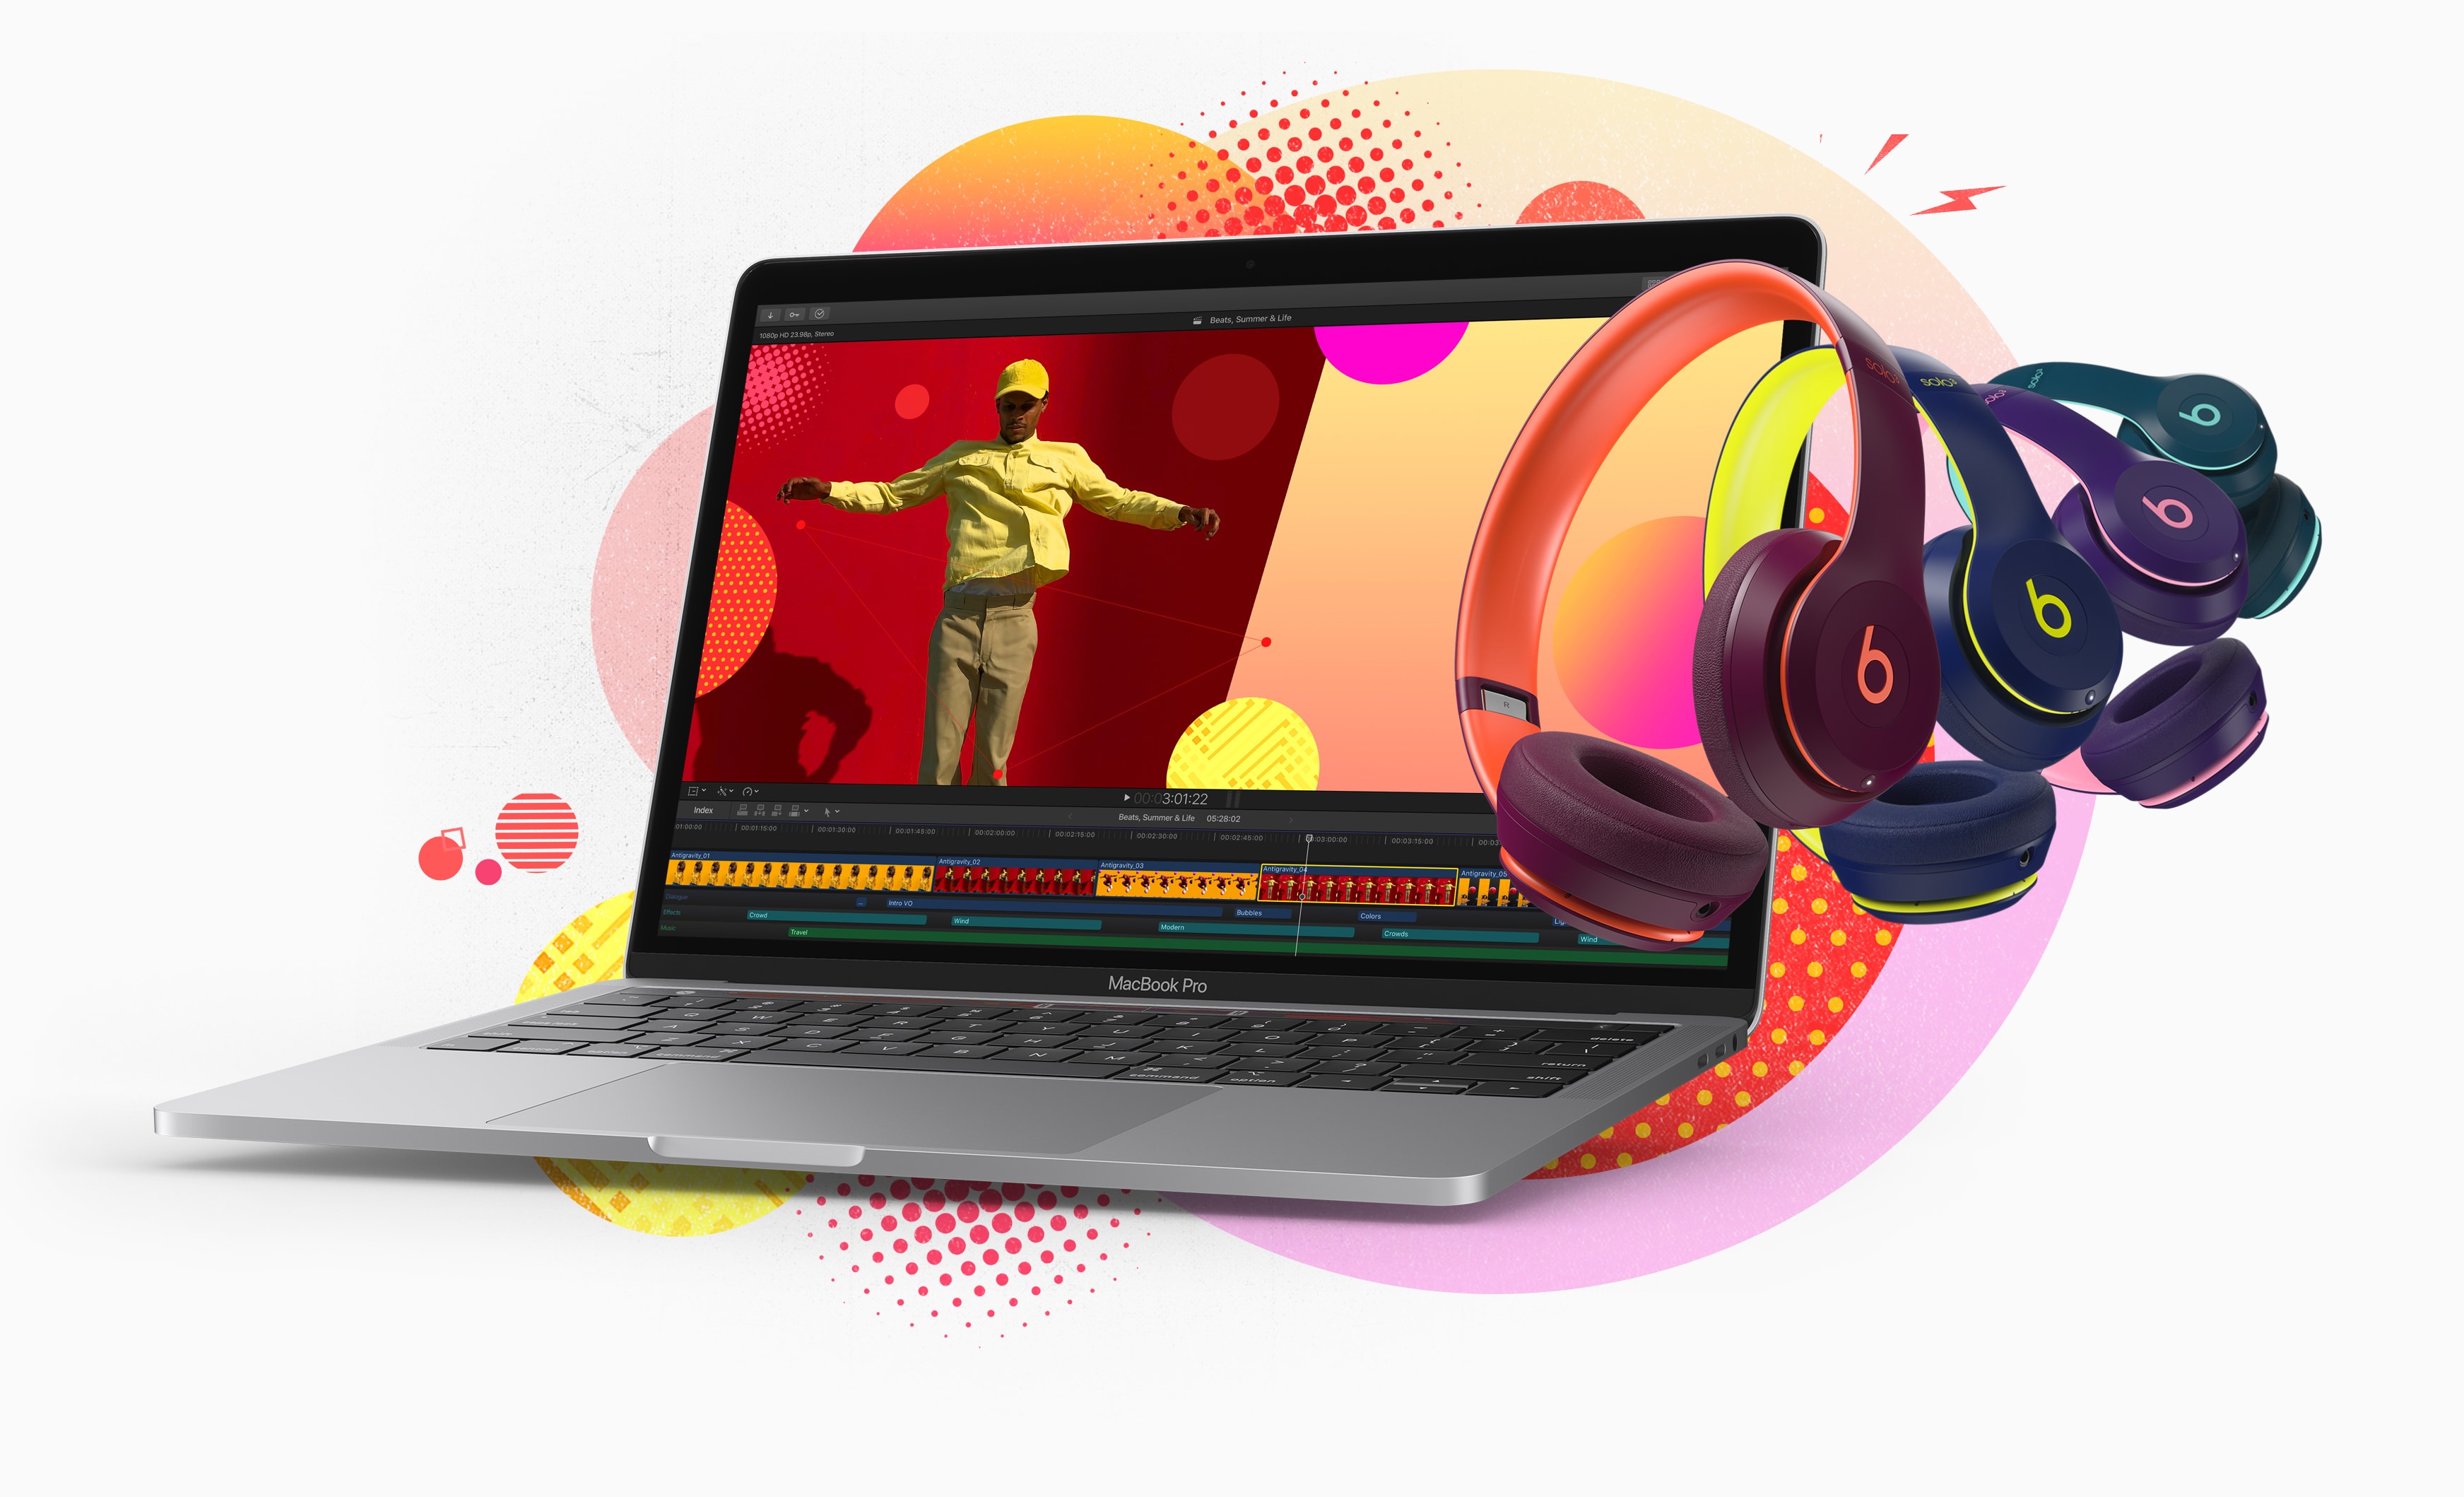 MacBook Pro com fones Beats - promoção de volta às aulas